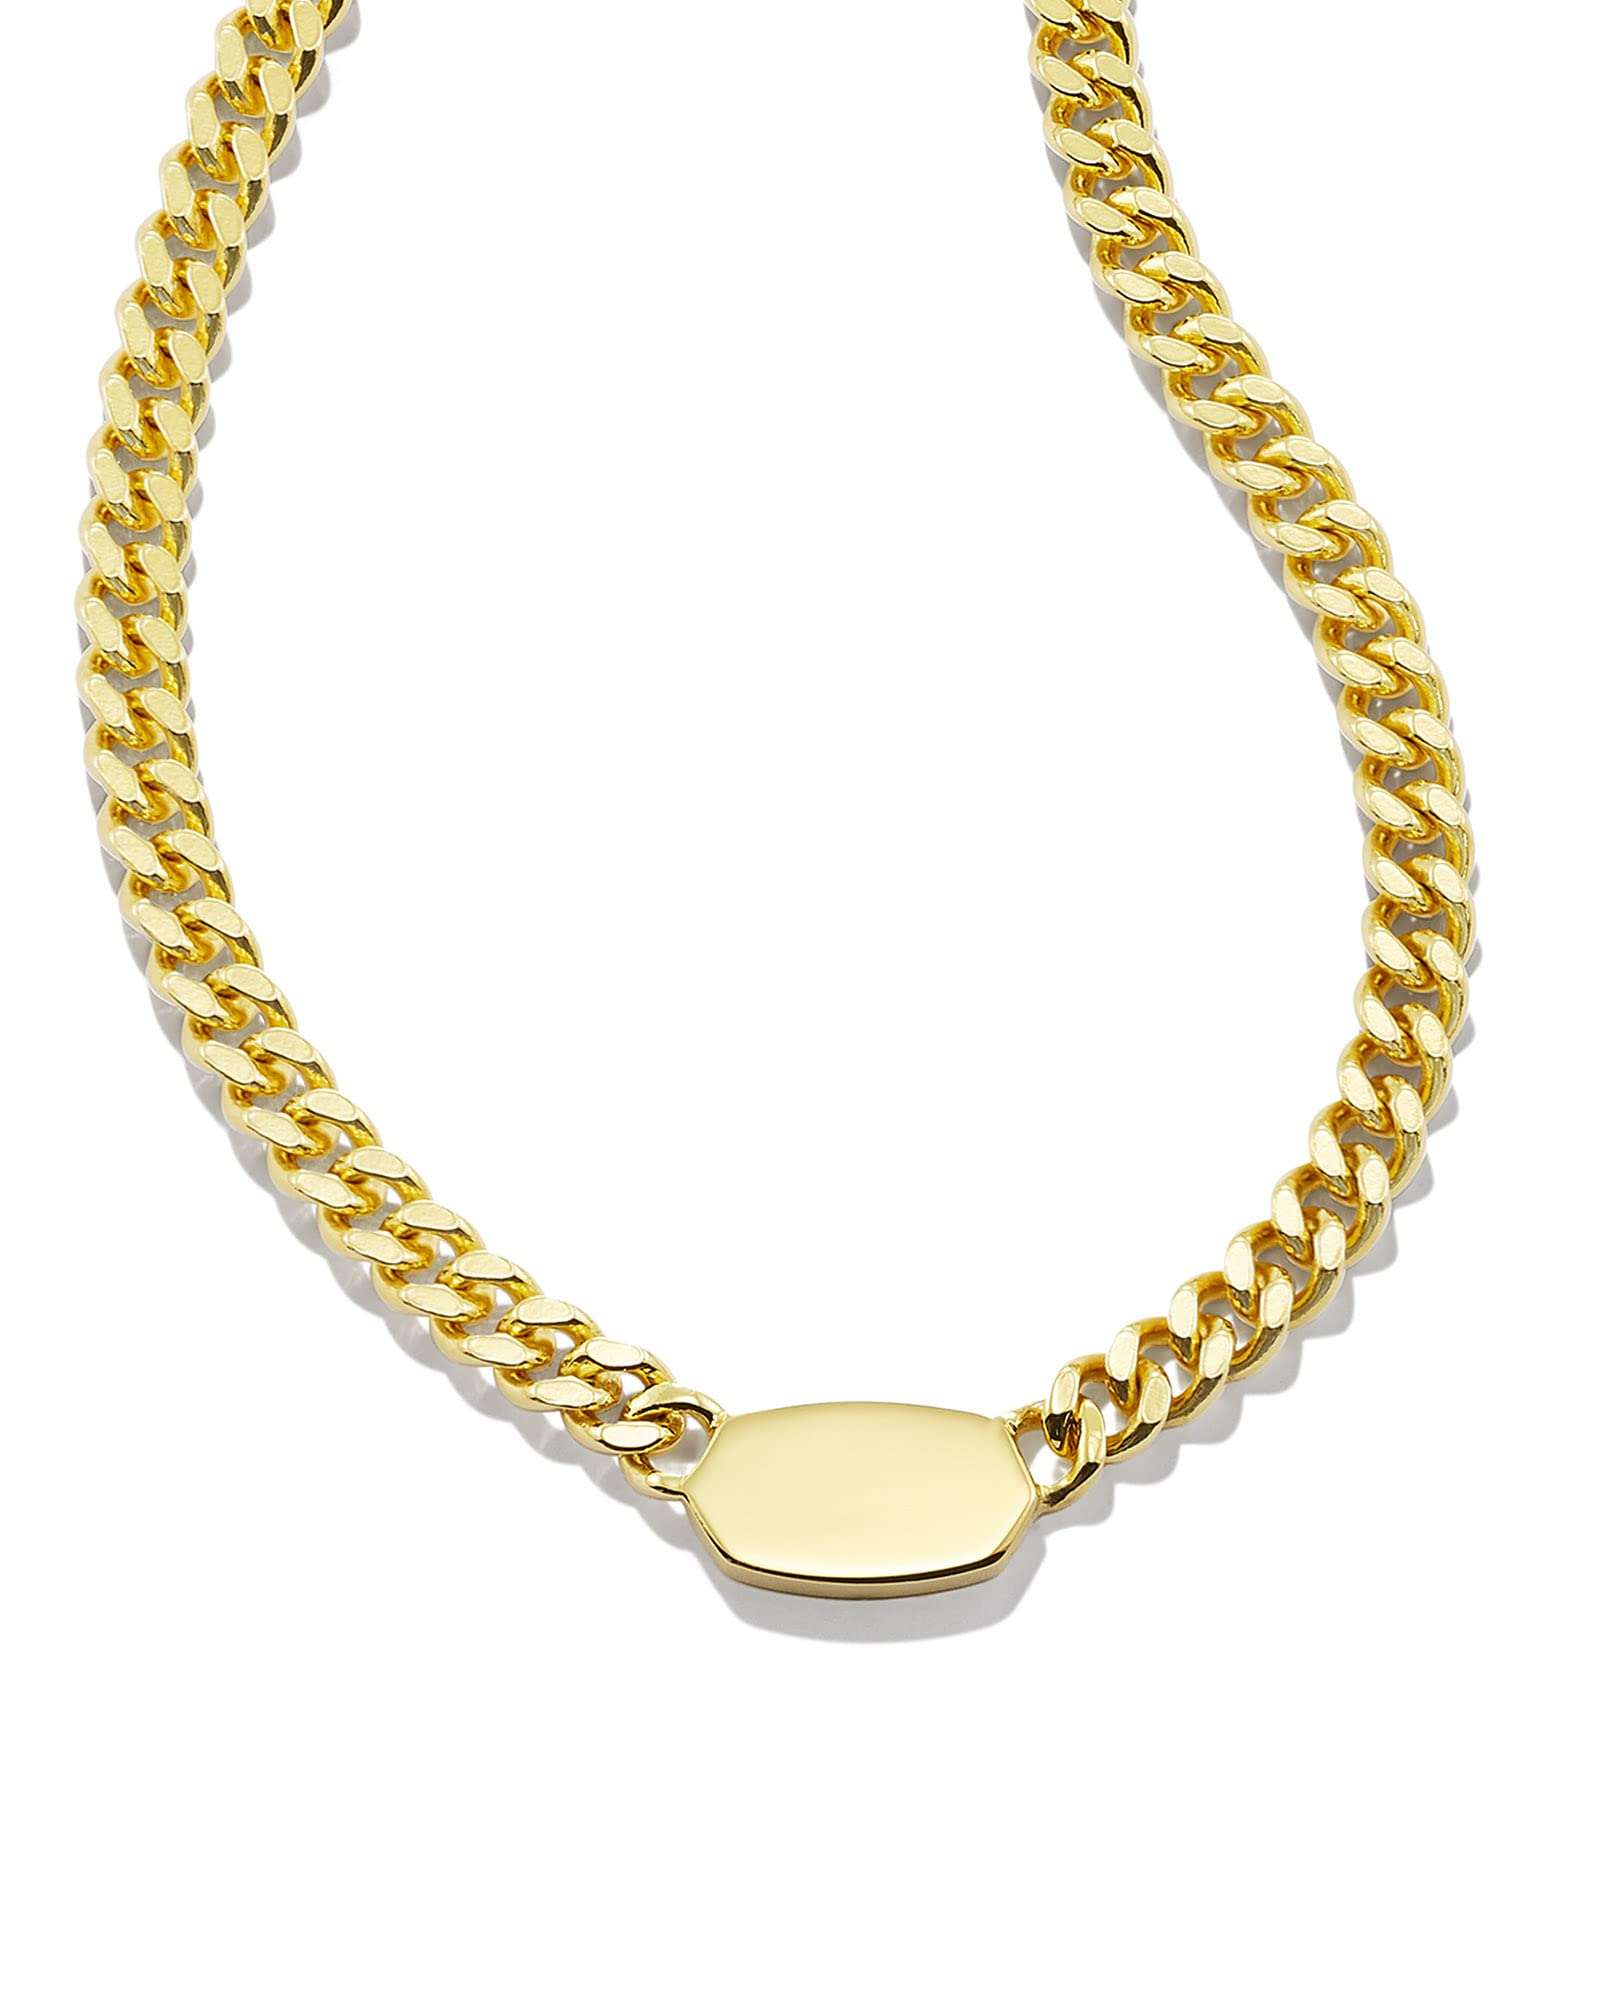 Kendra Scott Elisa 18k Gold Vermeil Curb Chain Necklace, Fine Jewelry for Women